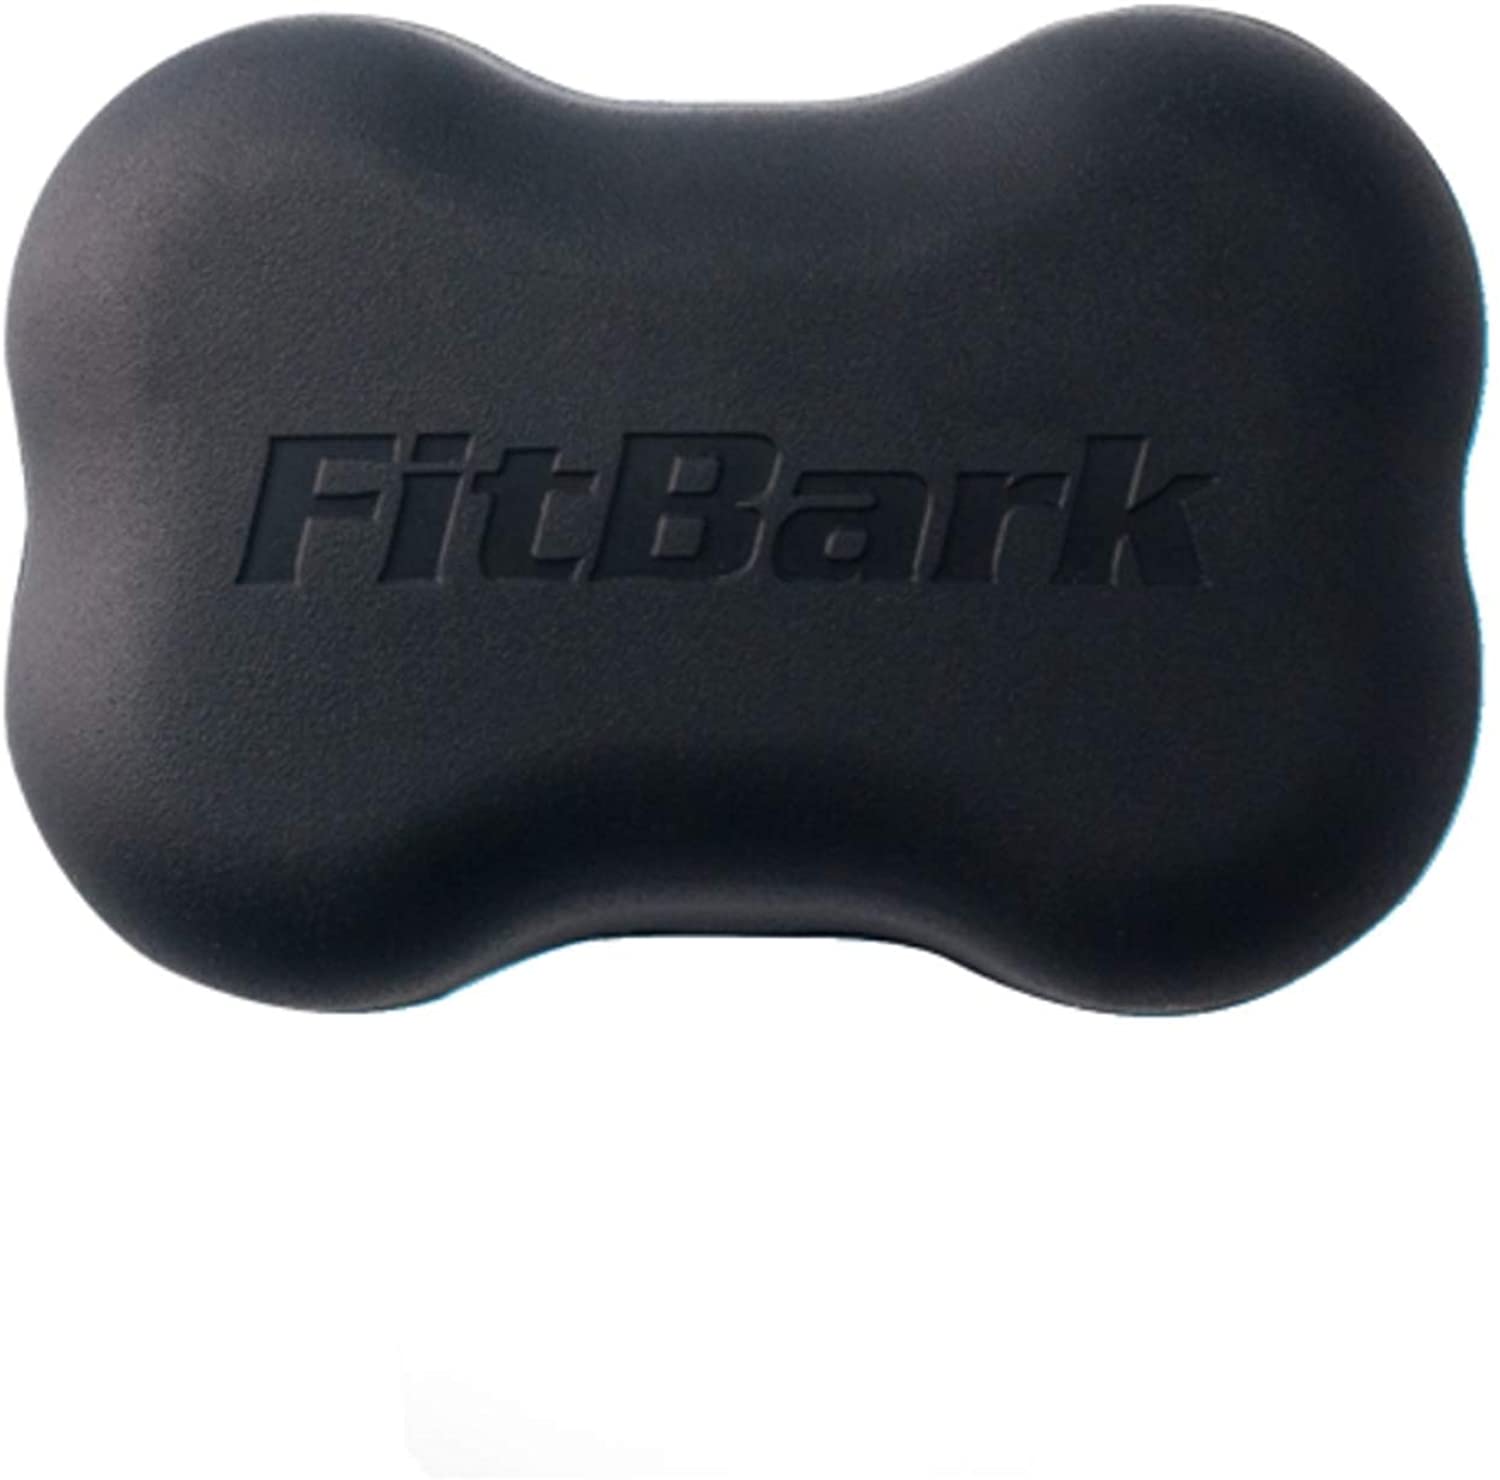 Fitbark 2 Dog Activity Monitor Black